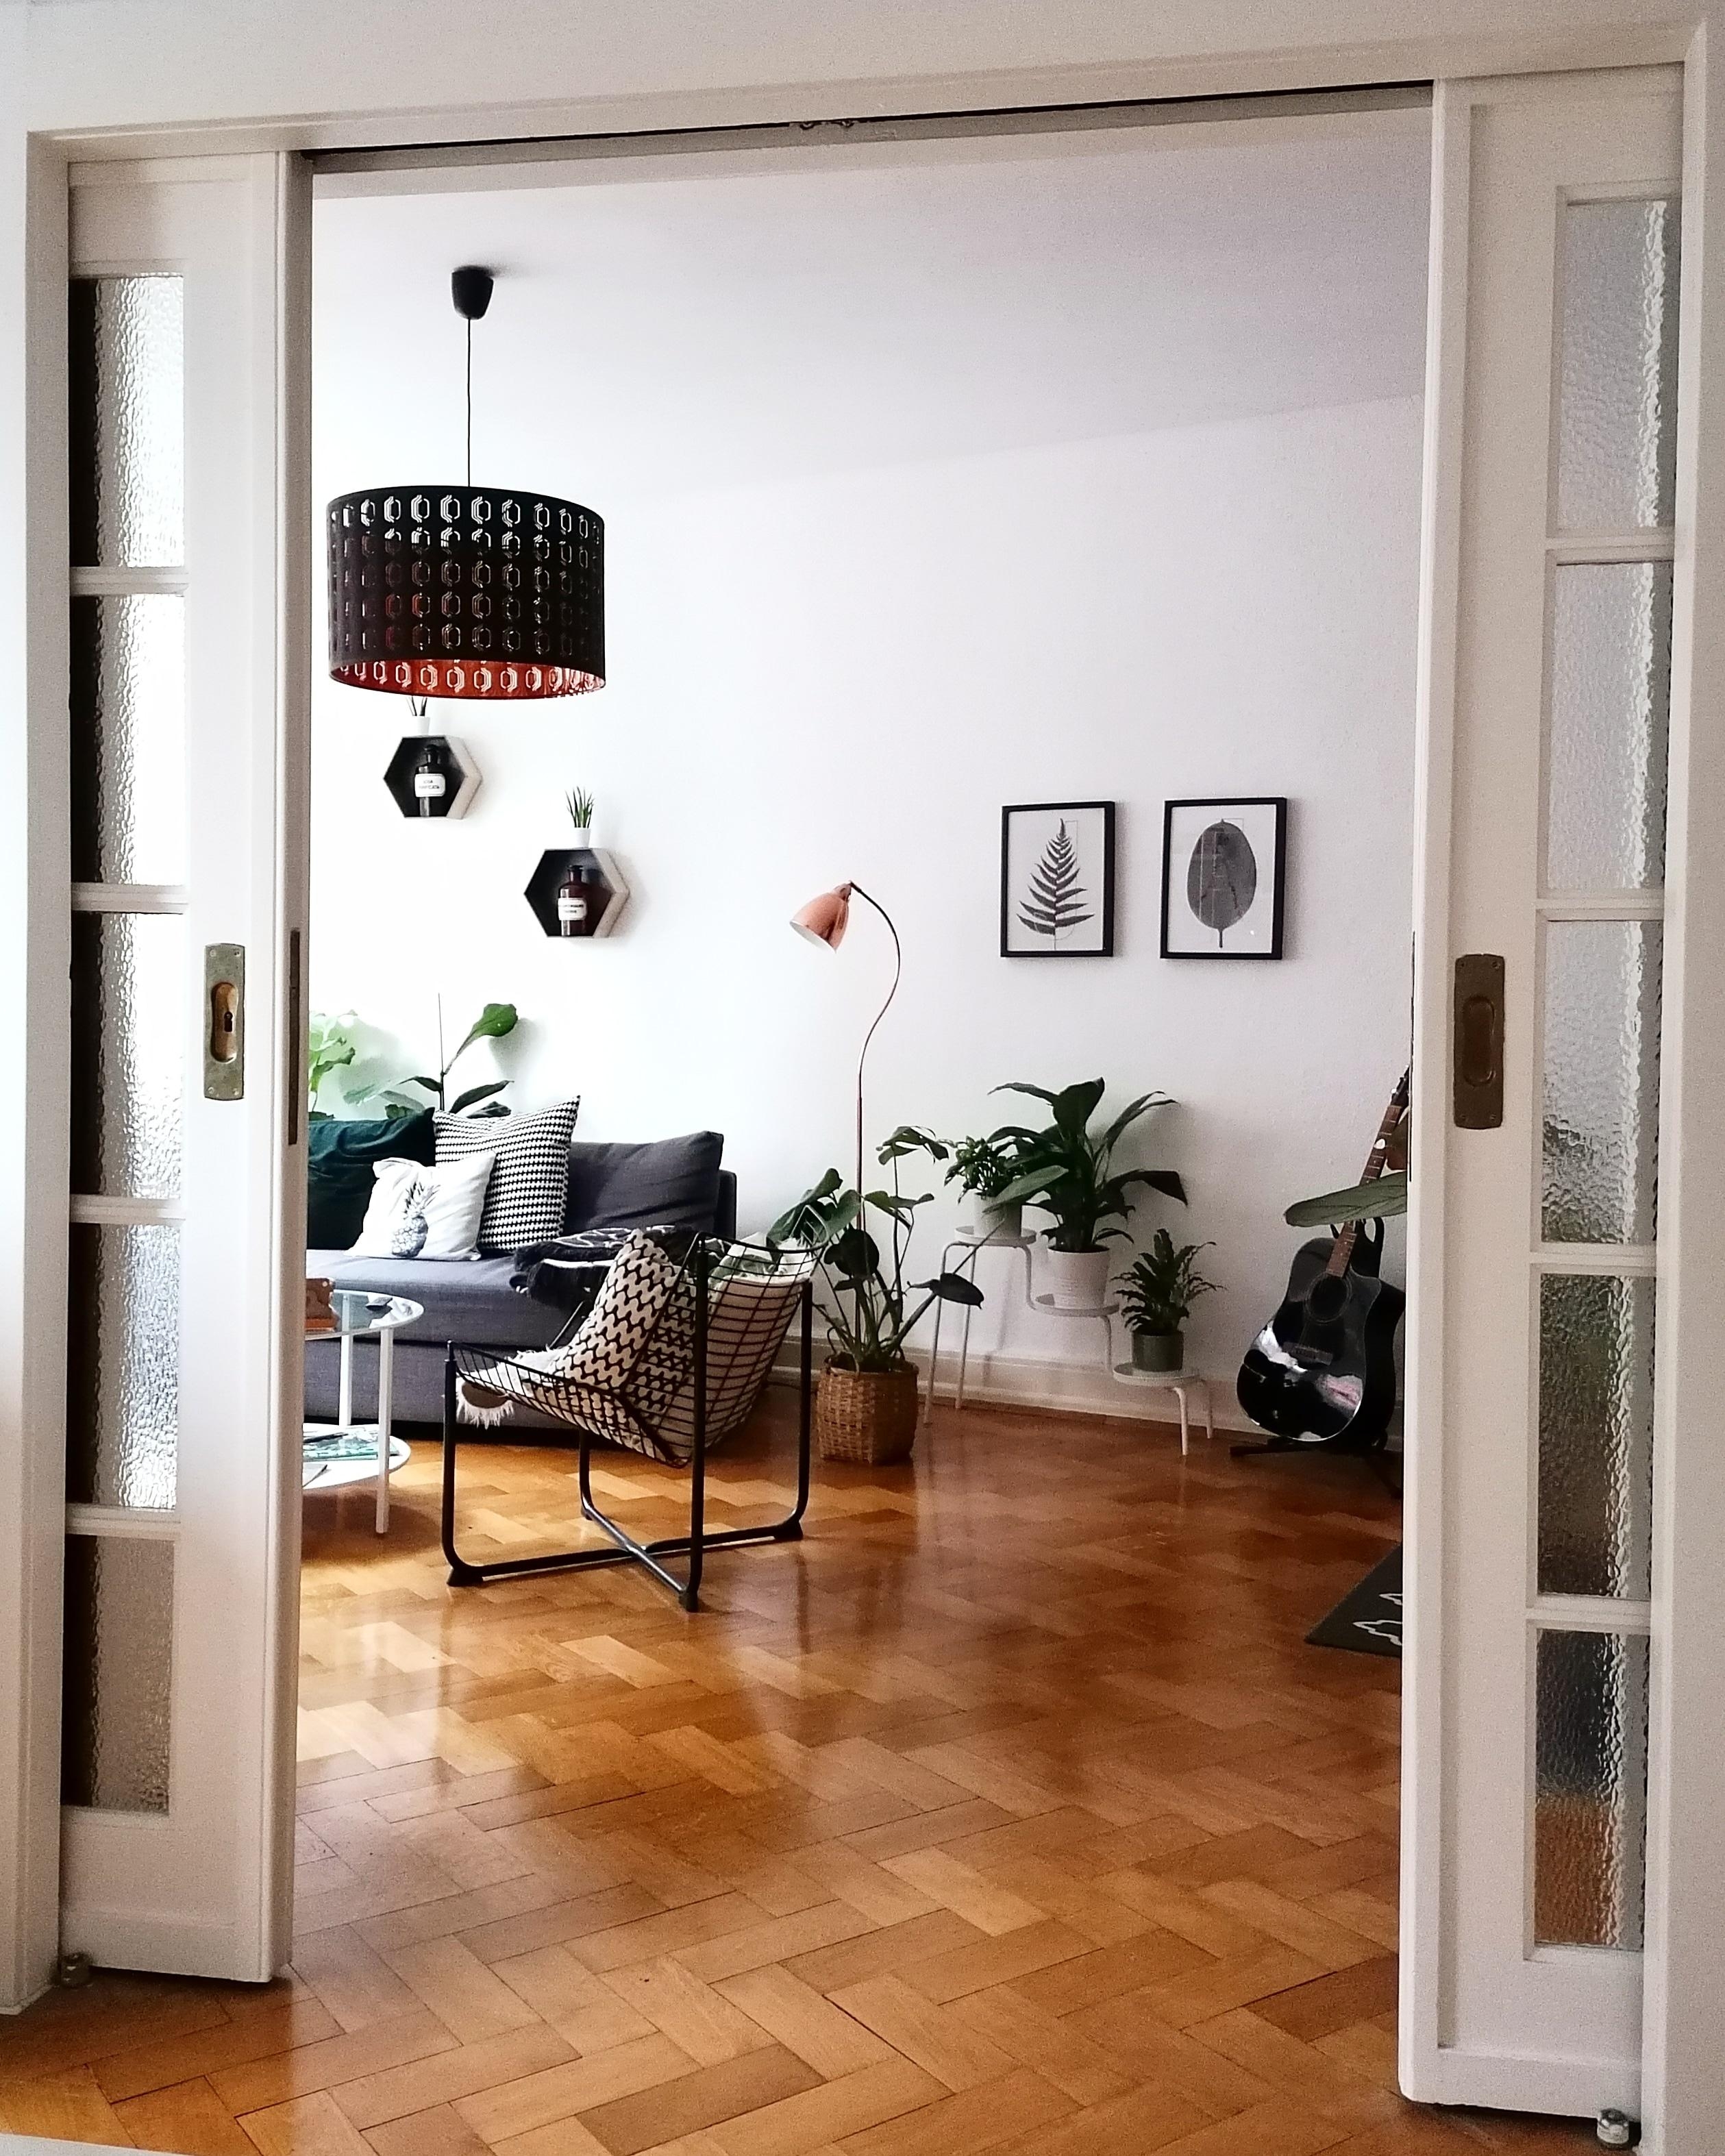 Sonntag #sundayvibes #view #interior #livingroom #urbanjungle #plantlover #plantgang #pflanzenliebe 